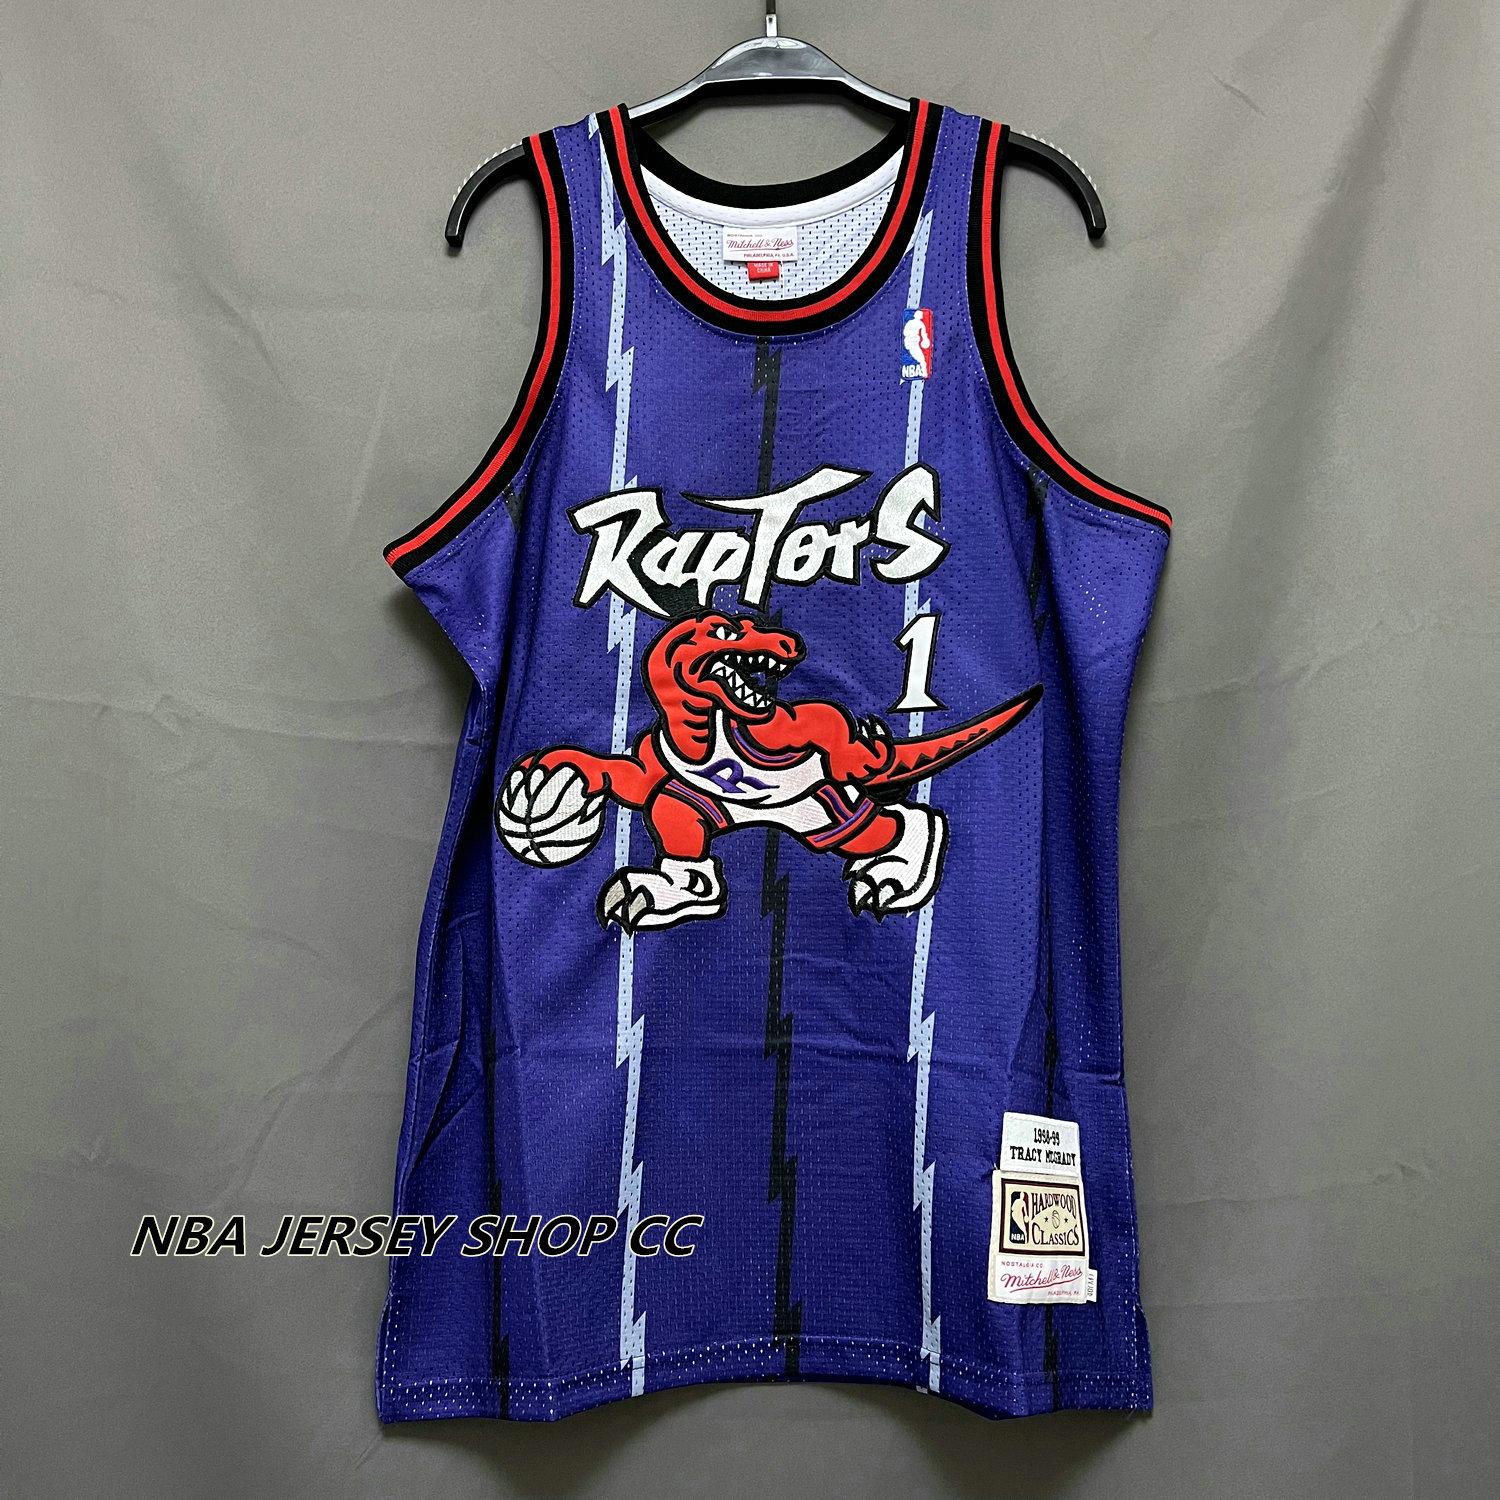 Toronto Raptors Old Jerseys for Sale - Vintage Sports Fashion